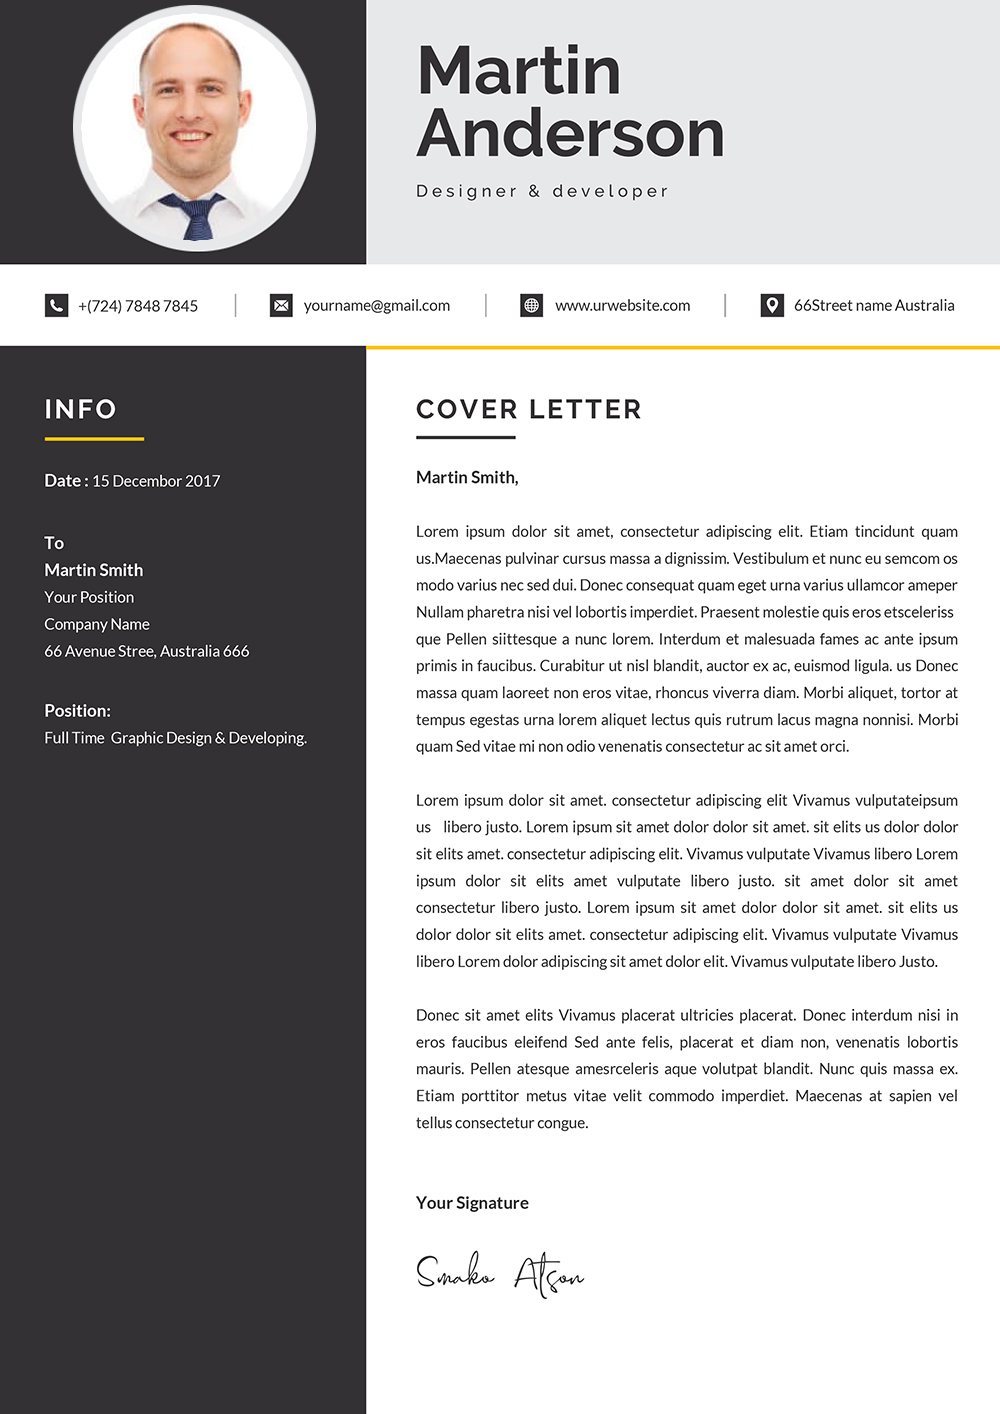 cover letter template for a designer